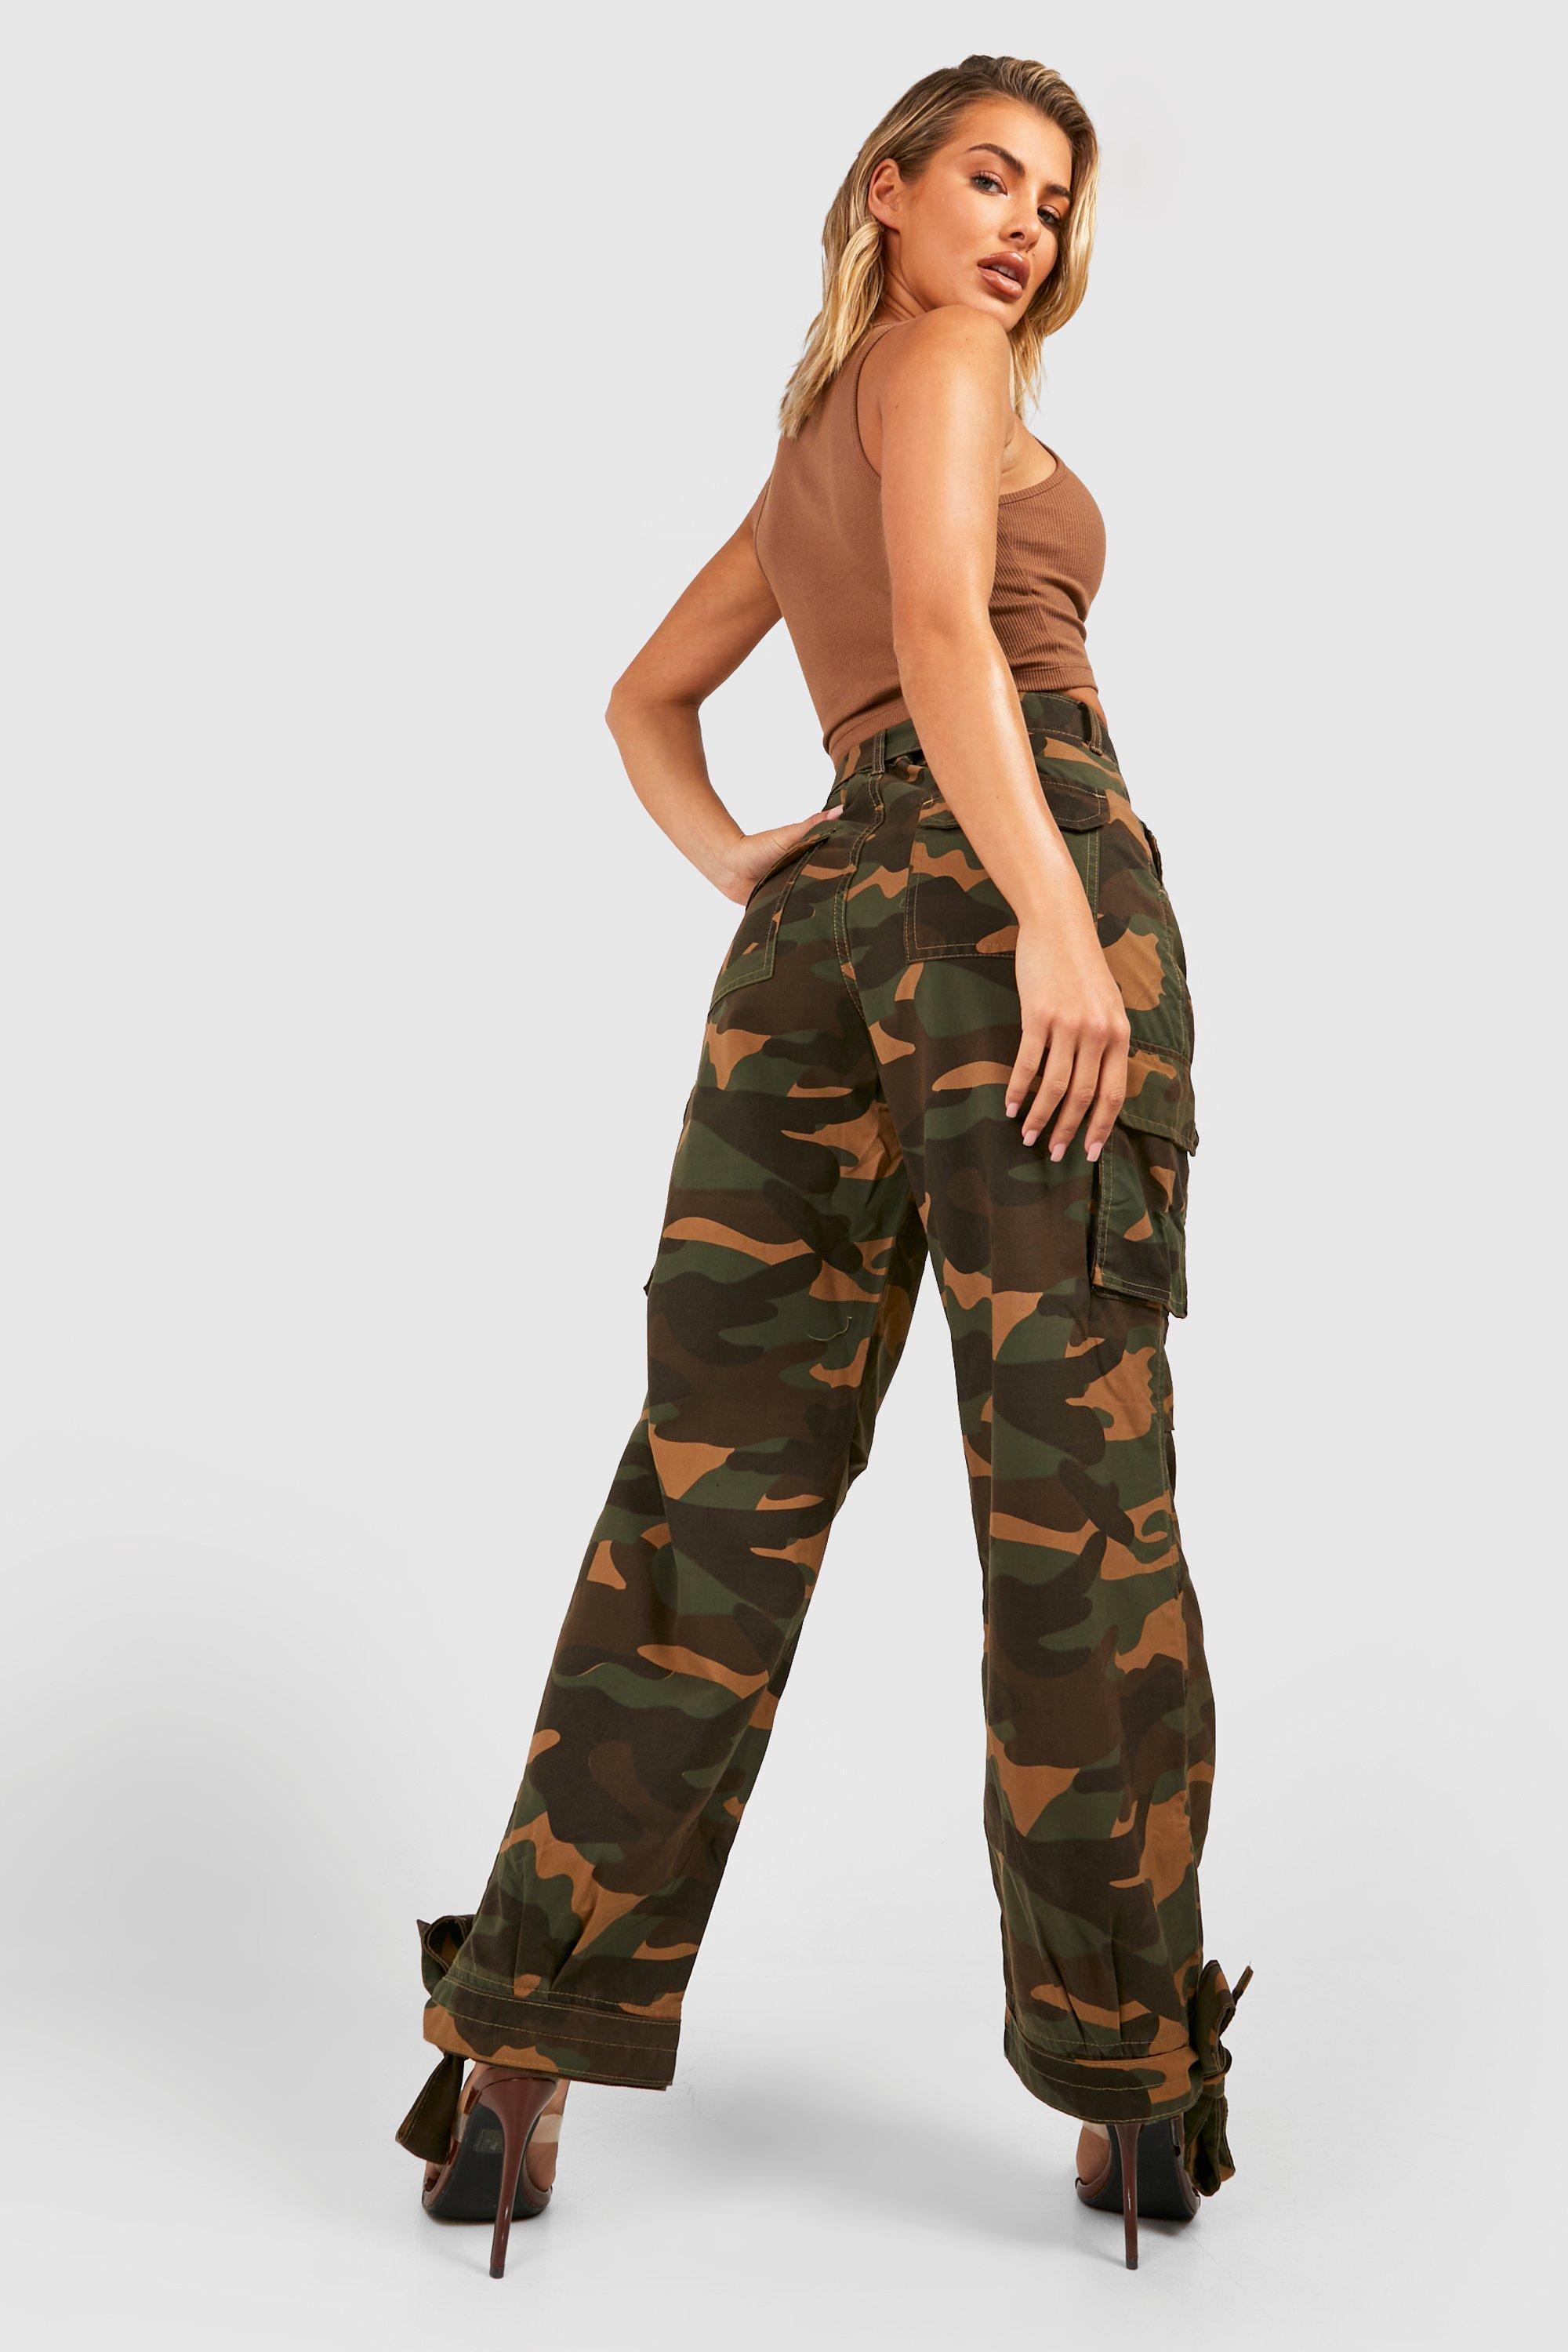 Men Cargo Trousers Pants Army Military Camo Print SG500 - Camo Khaki